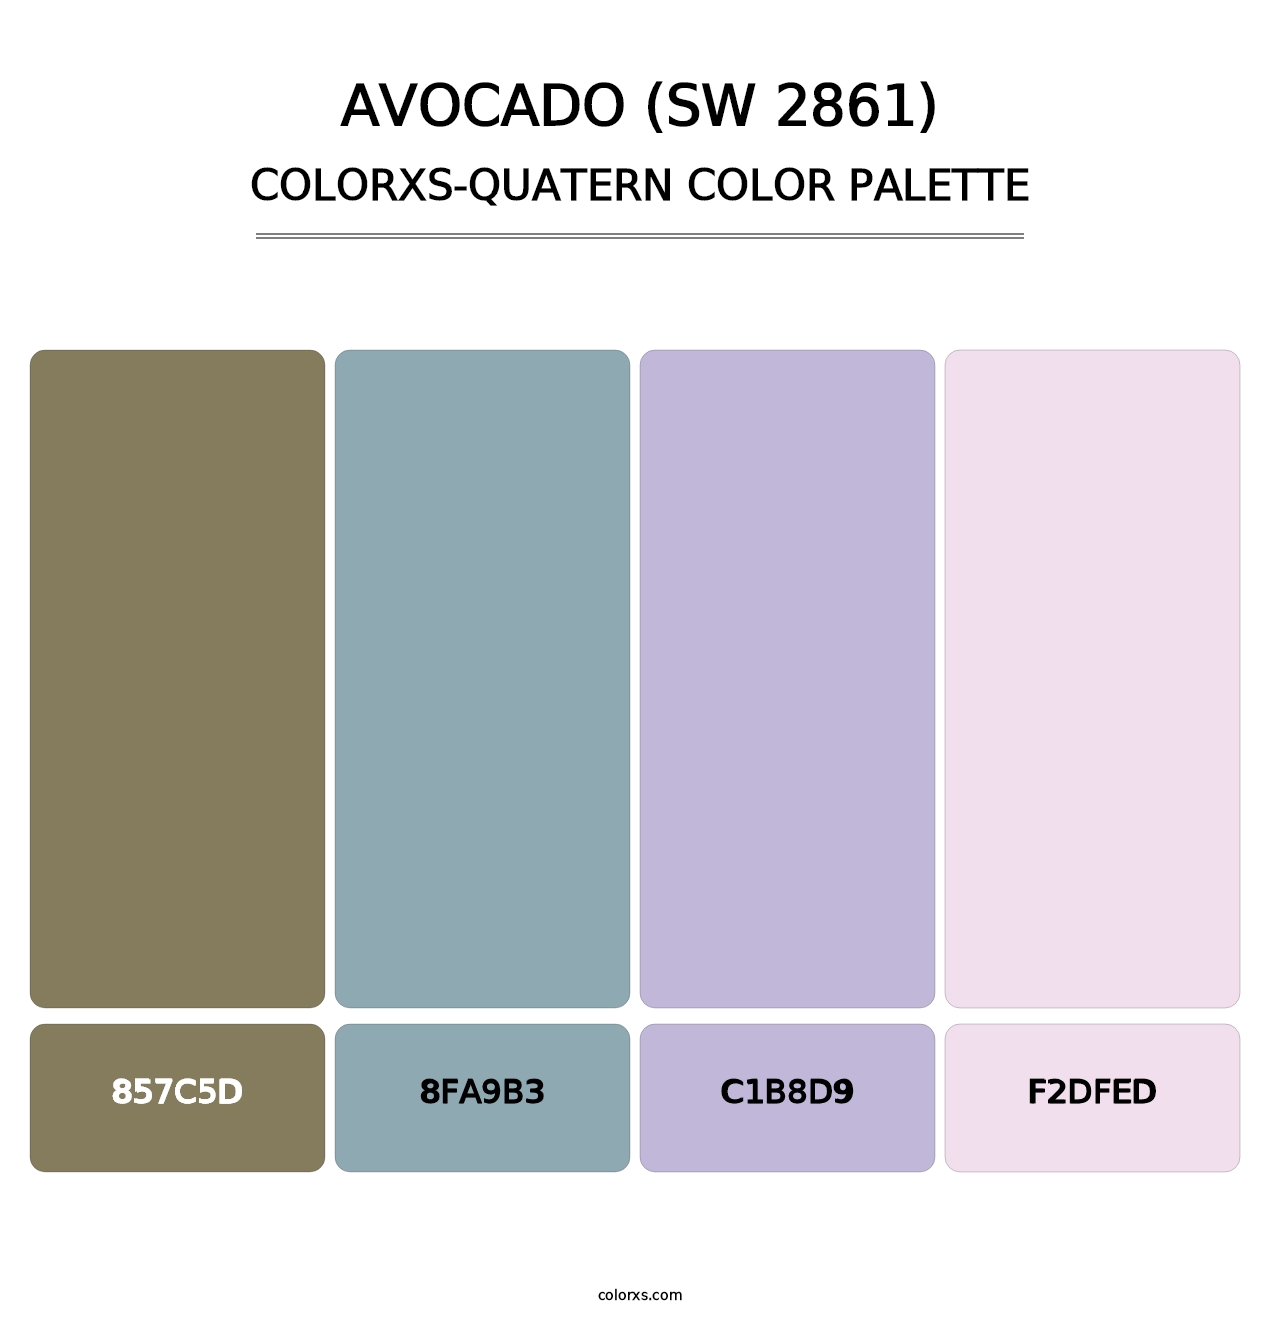 Avocado (SW 2861) - Colorxs Quatern Palette